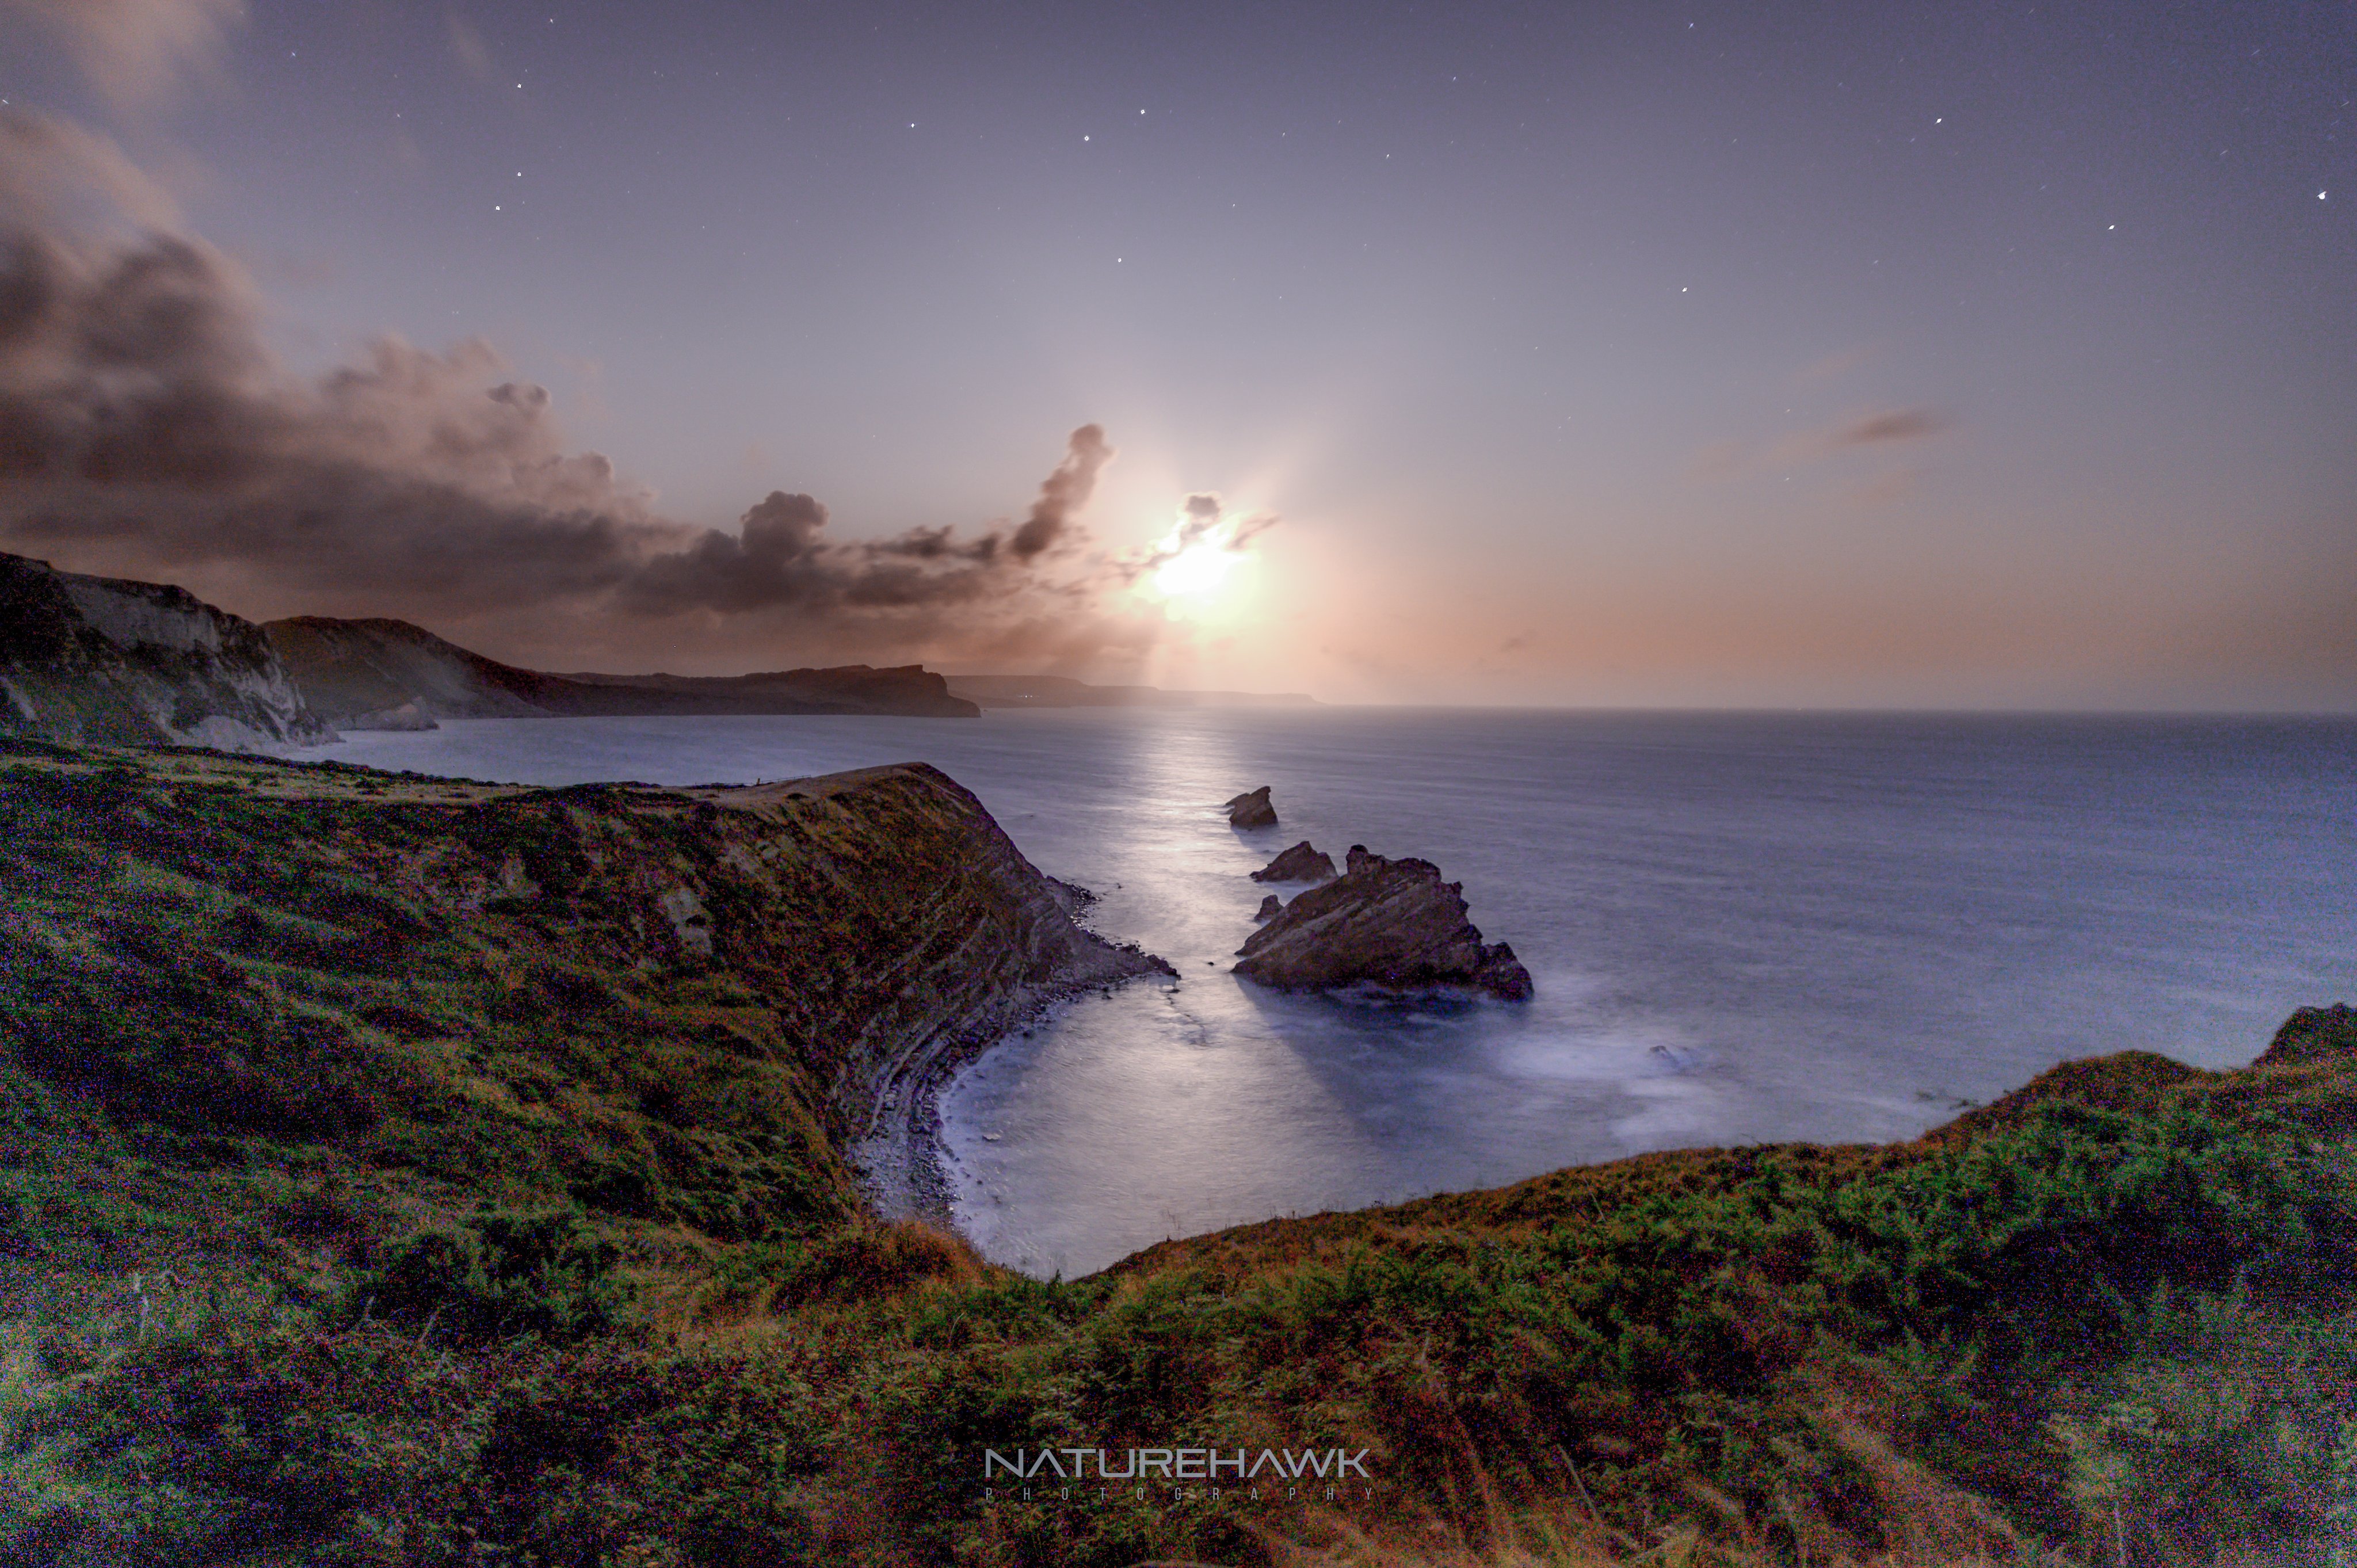 Moon rise over Mupe Bay on Dorset's Jurassic Coast just before midnight by Naturehawk Photo @NaturehawkPhoto